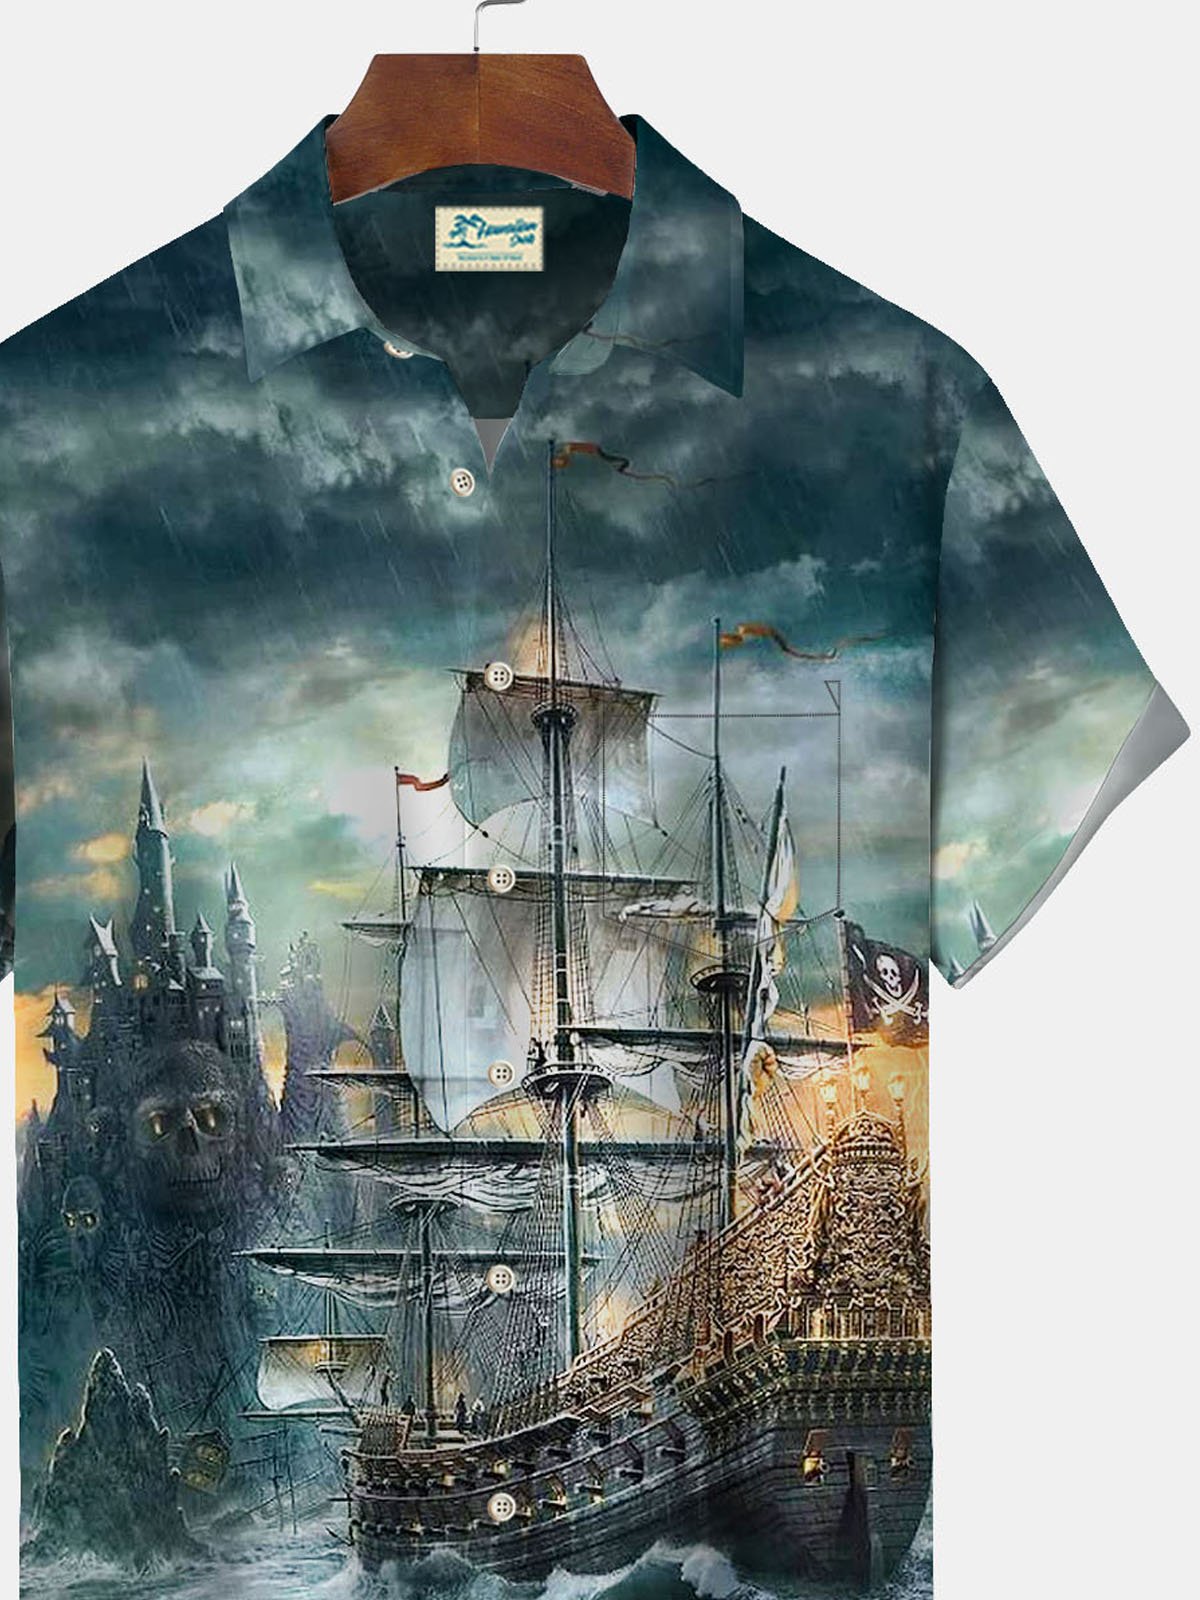 Royaura Vintage Nautical Pirate Ship Print Men's Button Pocket Shirt